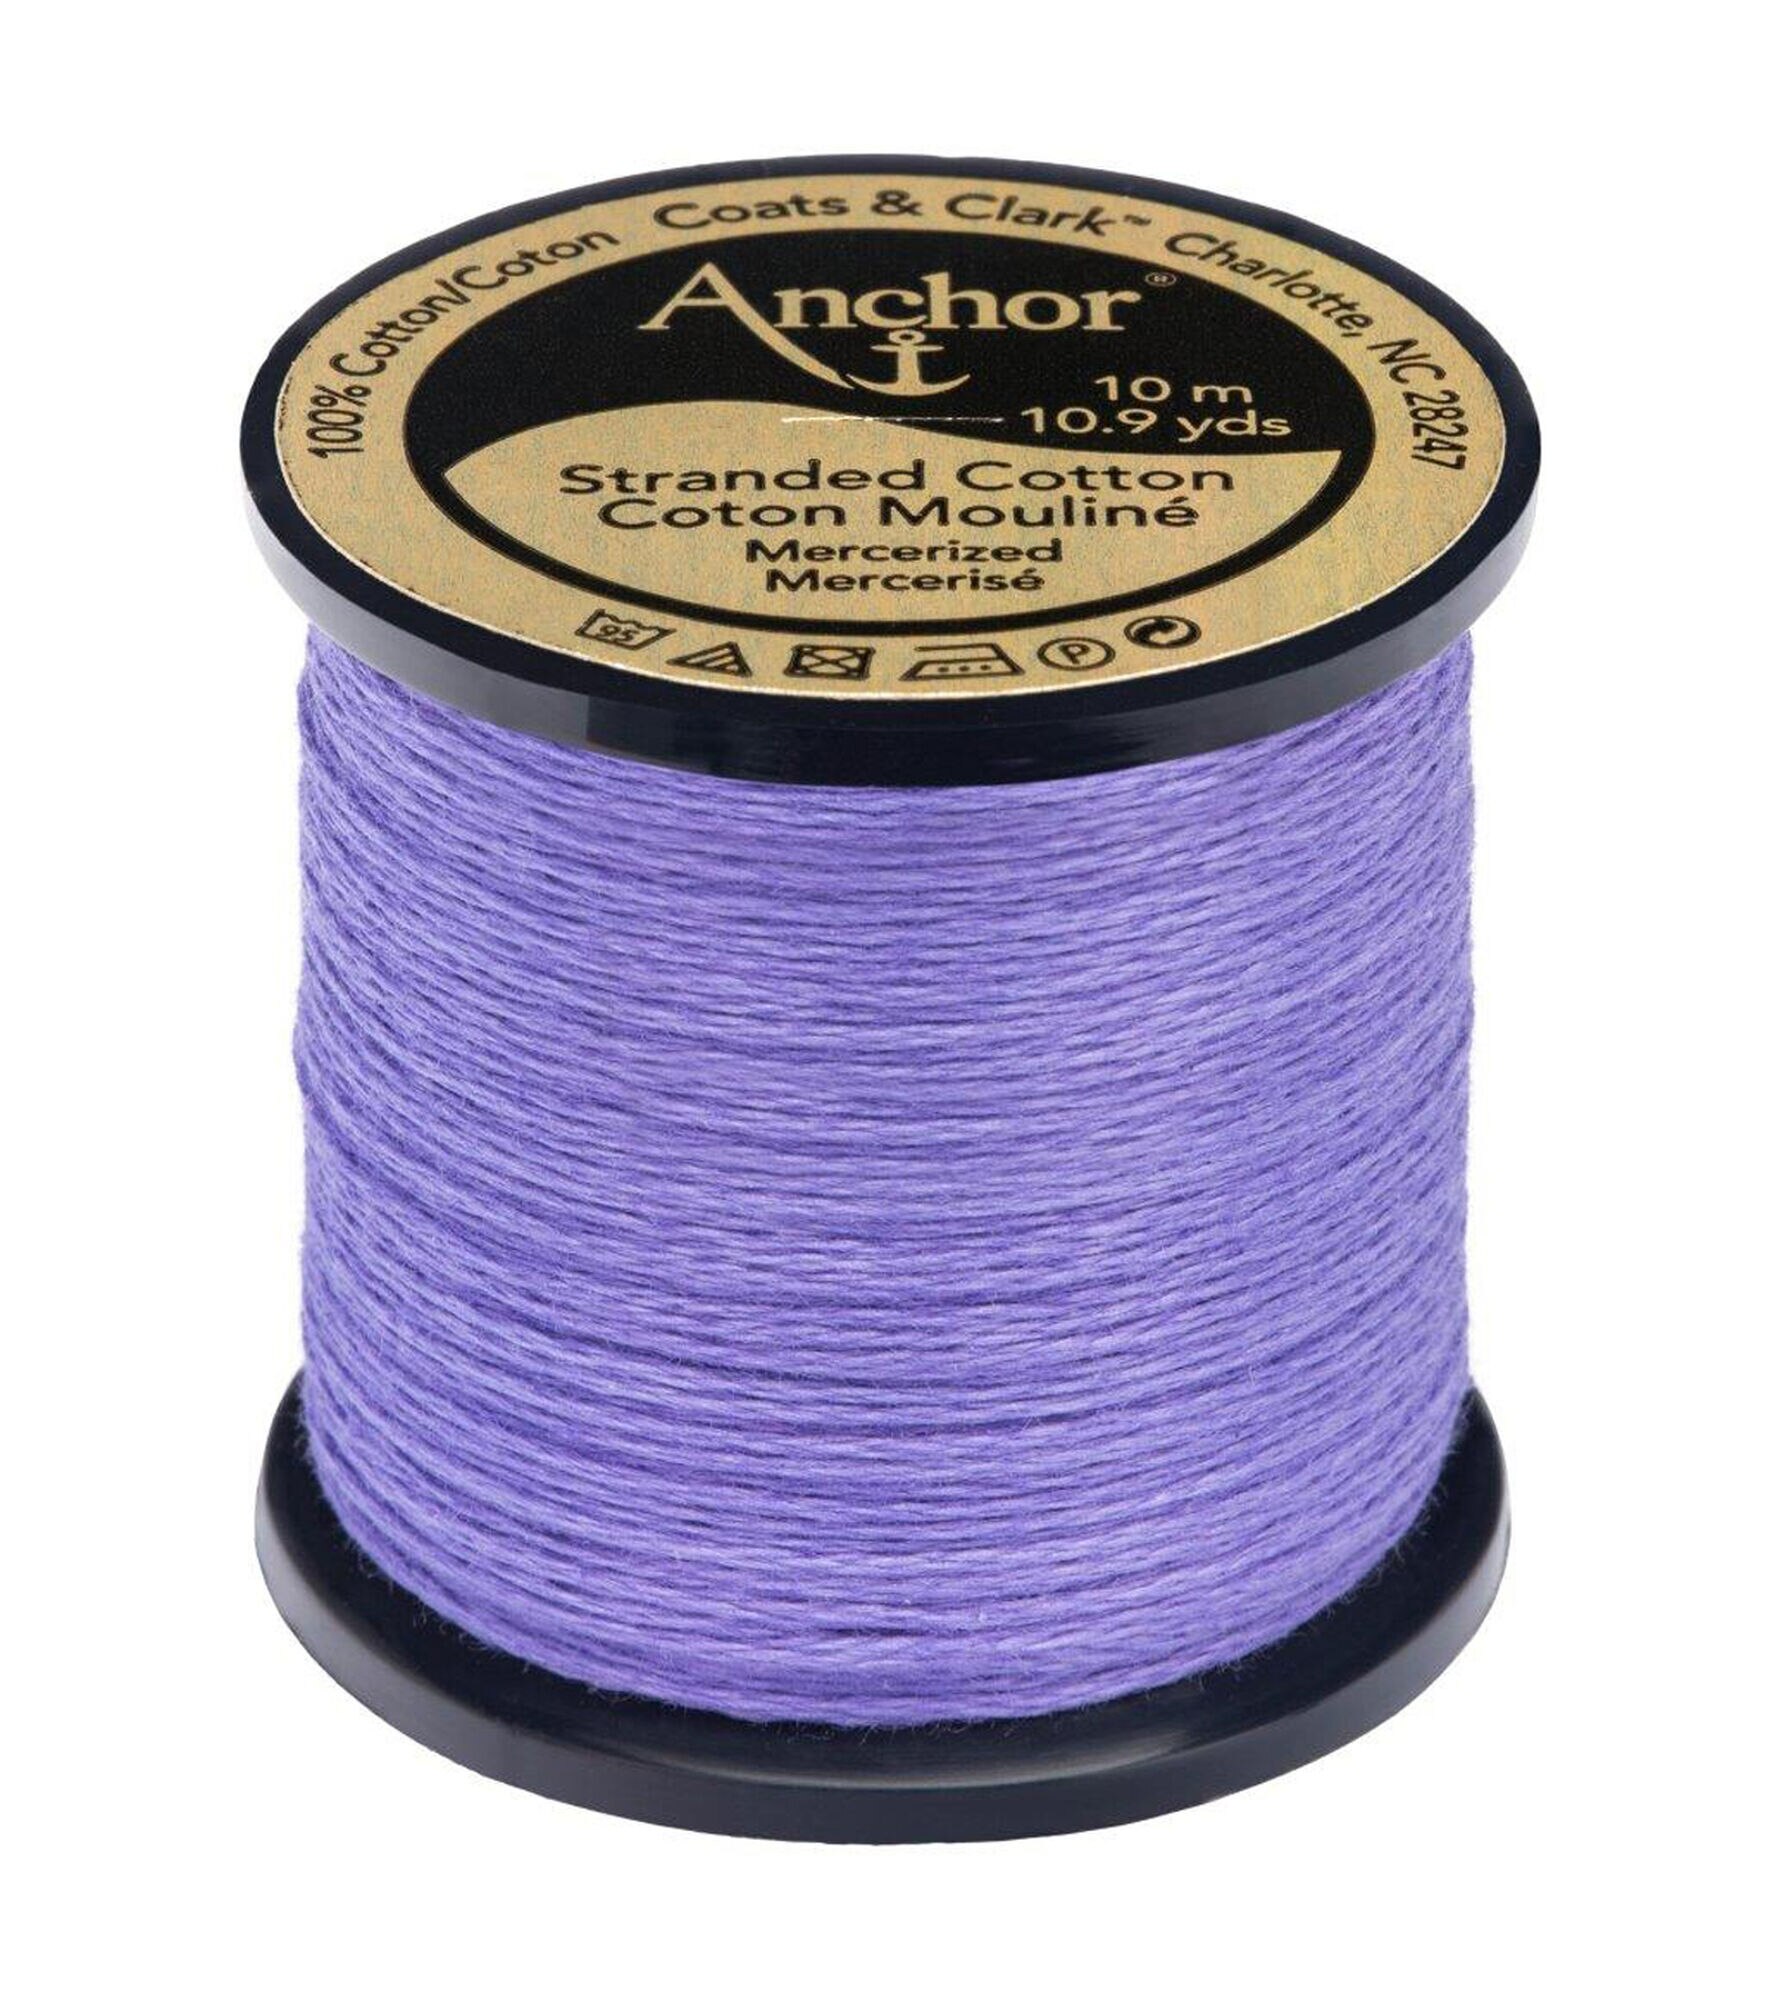 Anchor Cotton 10.9yd Purples Cotton Embroidery Floss, 1030 Thistle Medium Dark, hi-res